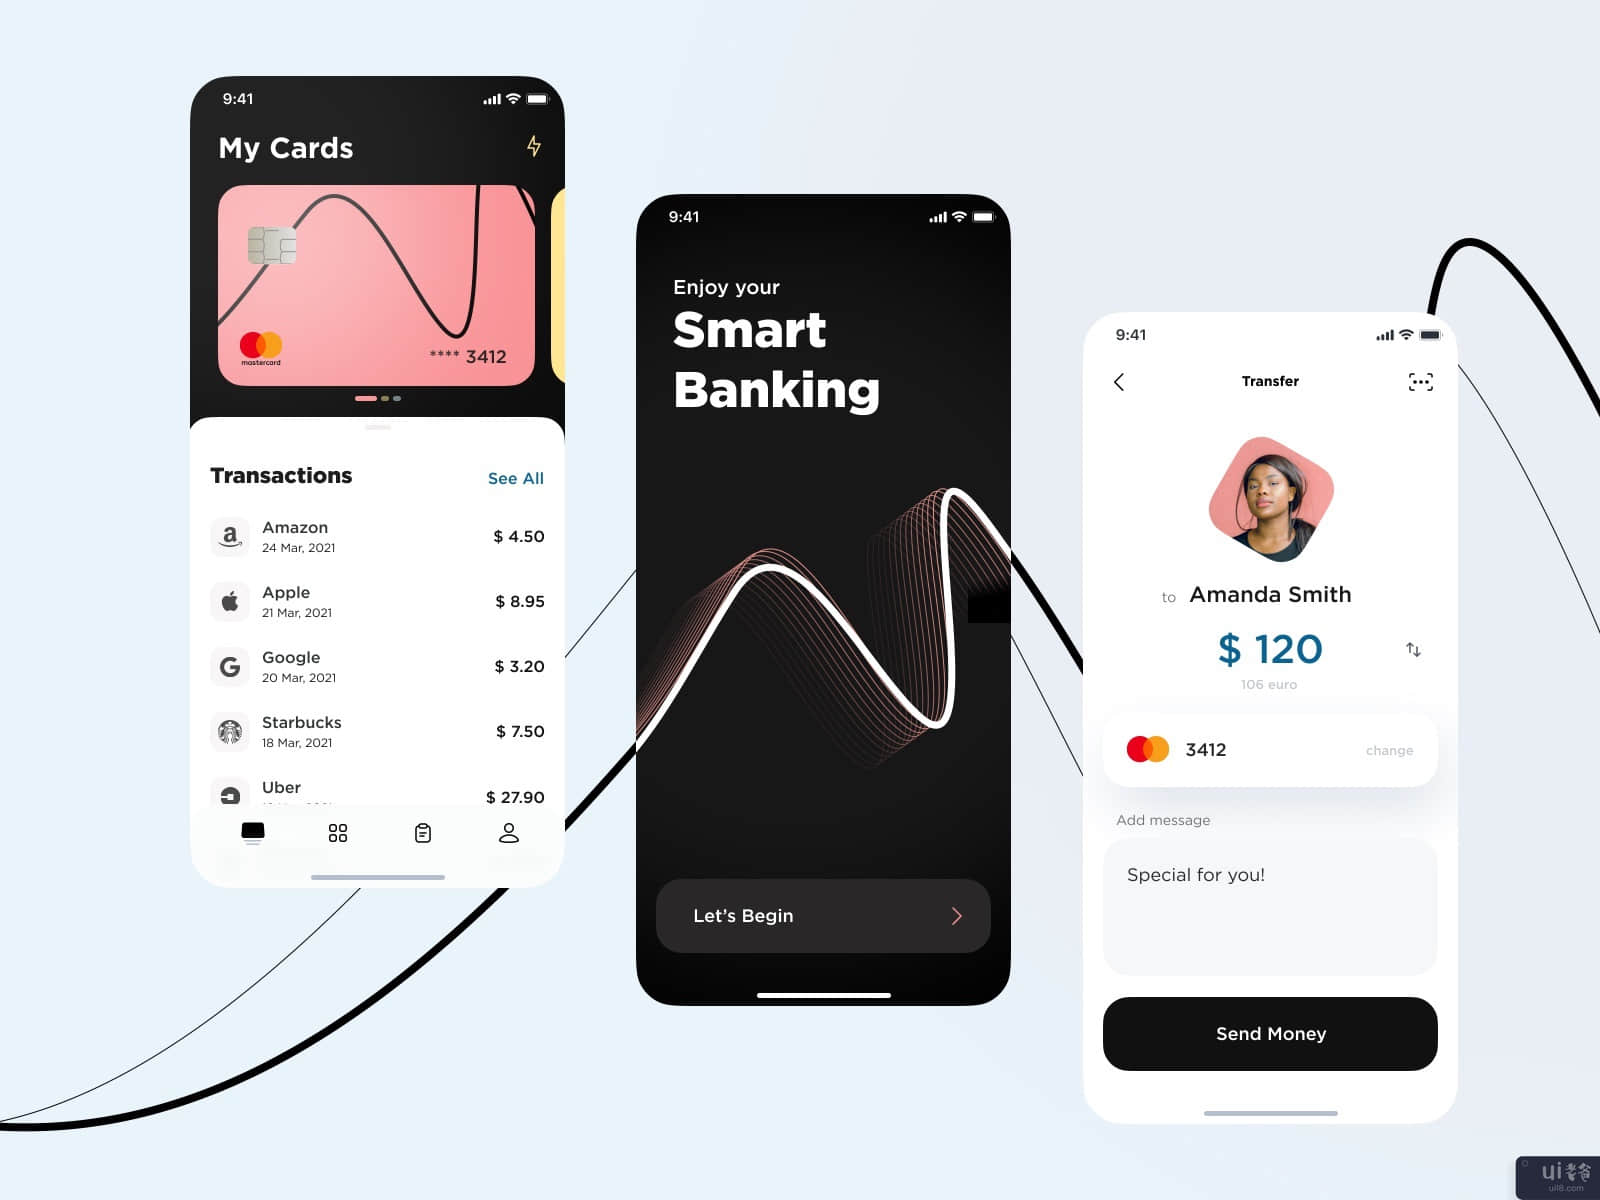 智能银行应用程序(Smart Banking App)插图